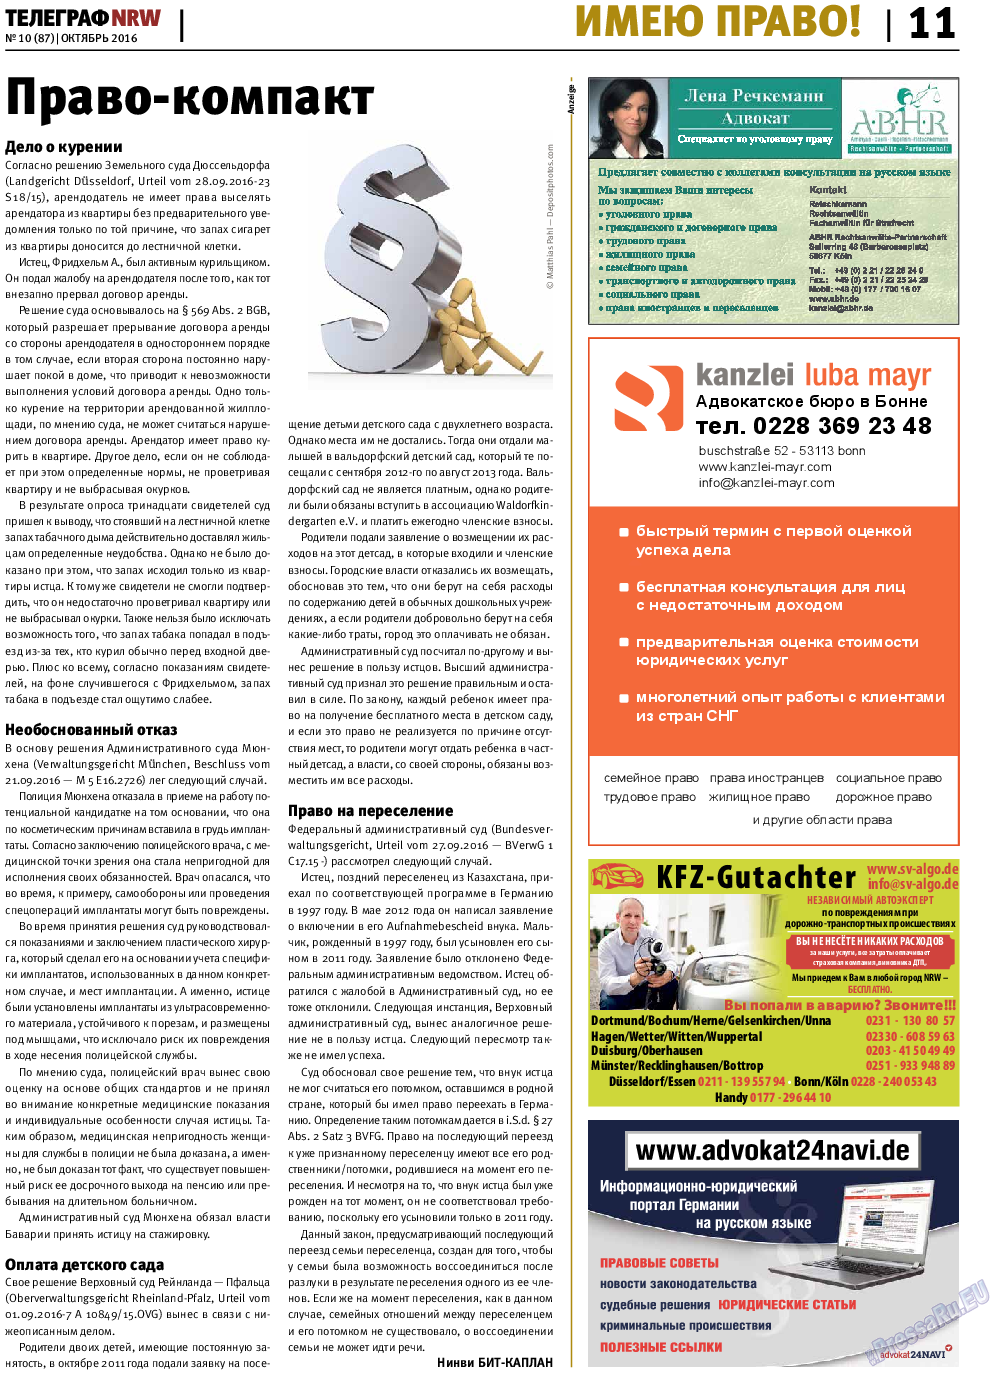 Телеграф NRW, газета. 2016 №10 стр.11